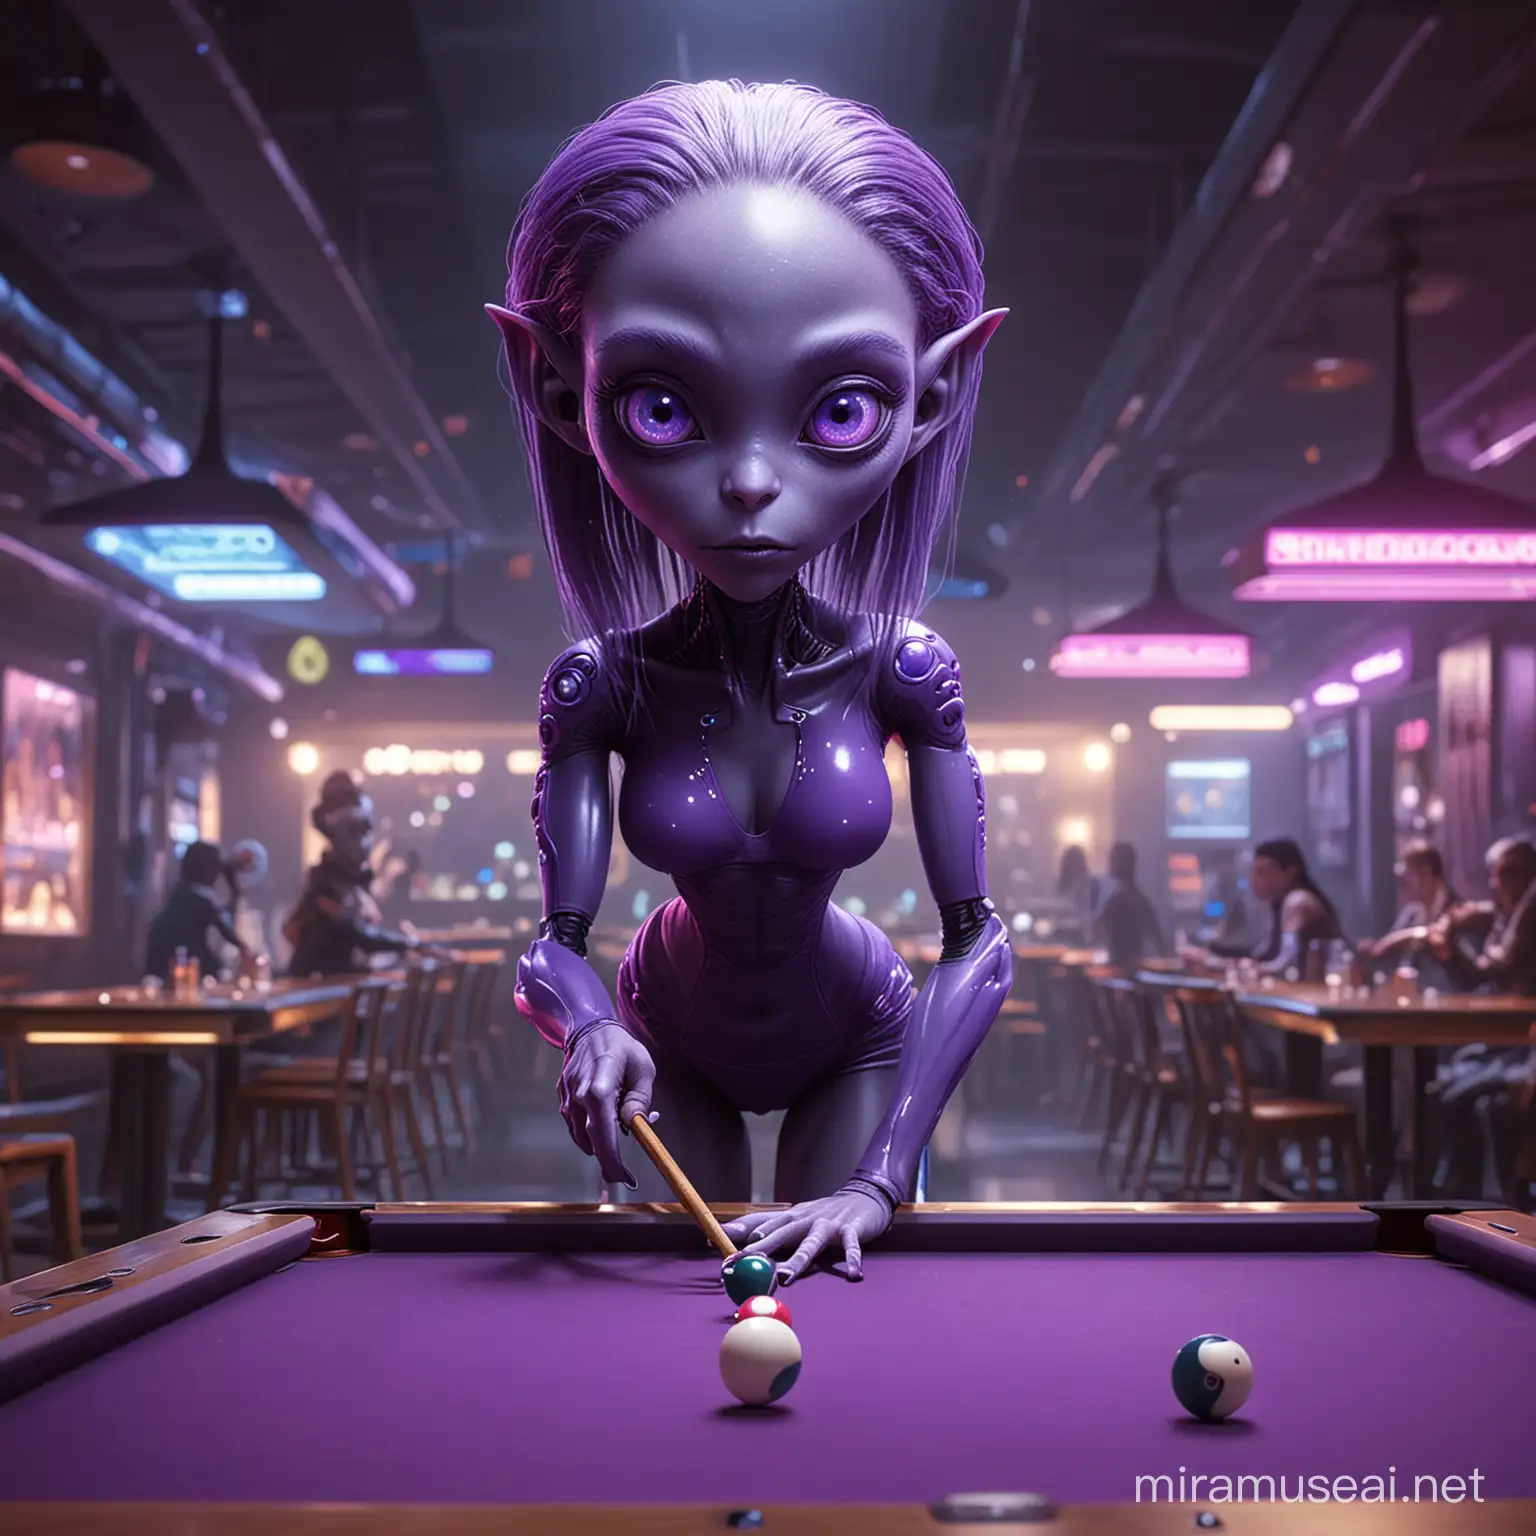 Futuristic Purple Alien Playing Billiards in Stylish Bar Setting